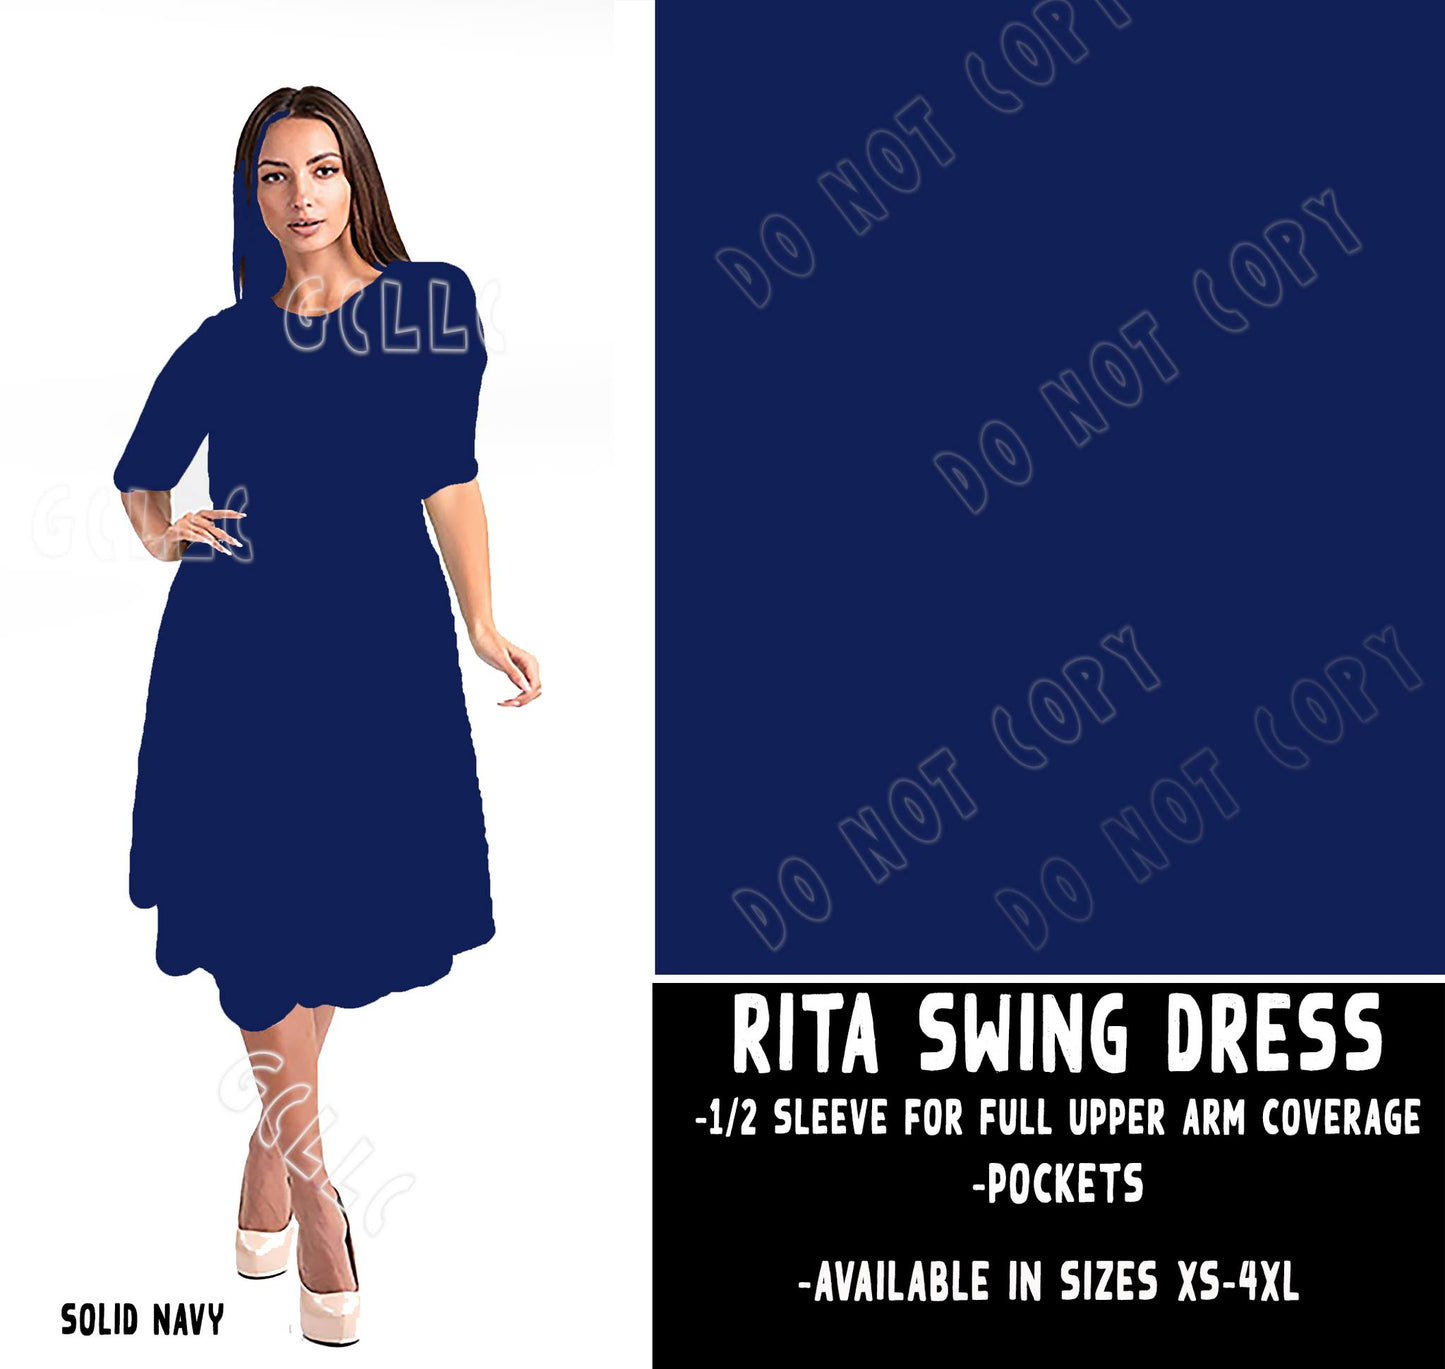 RITA SWING DRESS RUN-NAVY